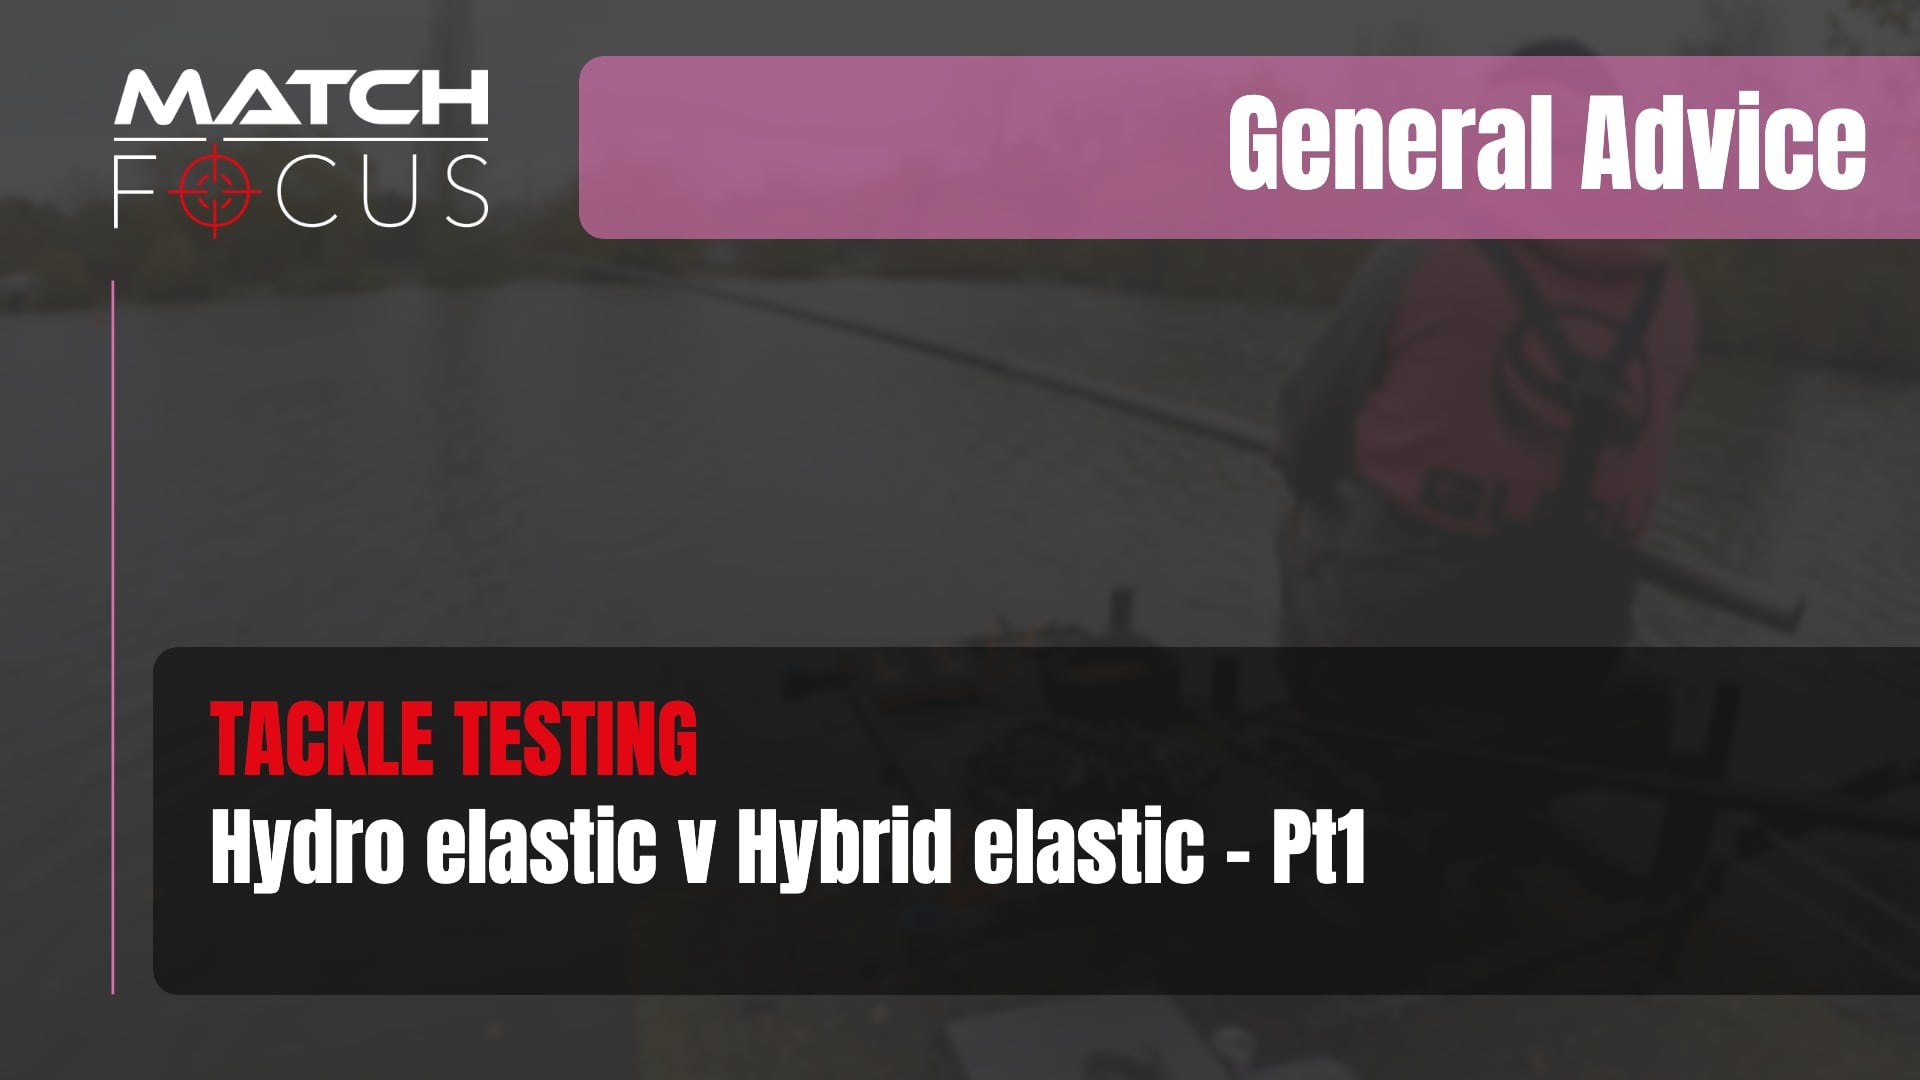 Hollow (Hydro) v Hybrid Elastic Comparison Pt1 | General Advice 033